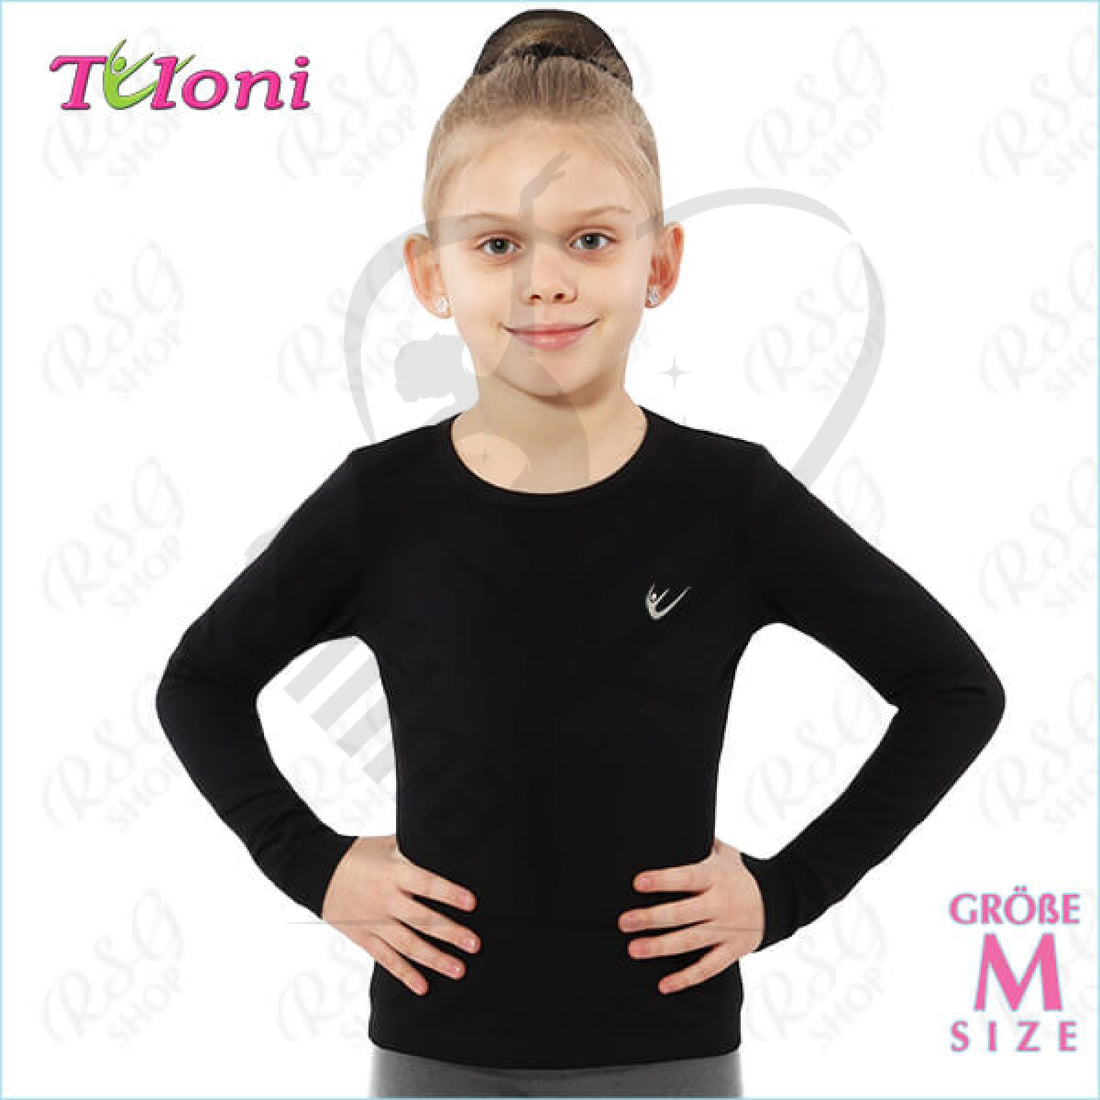 Tuloni Long Sleeve Top M (152-158) T Shirts & Tops